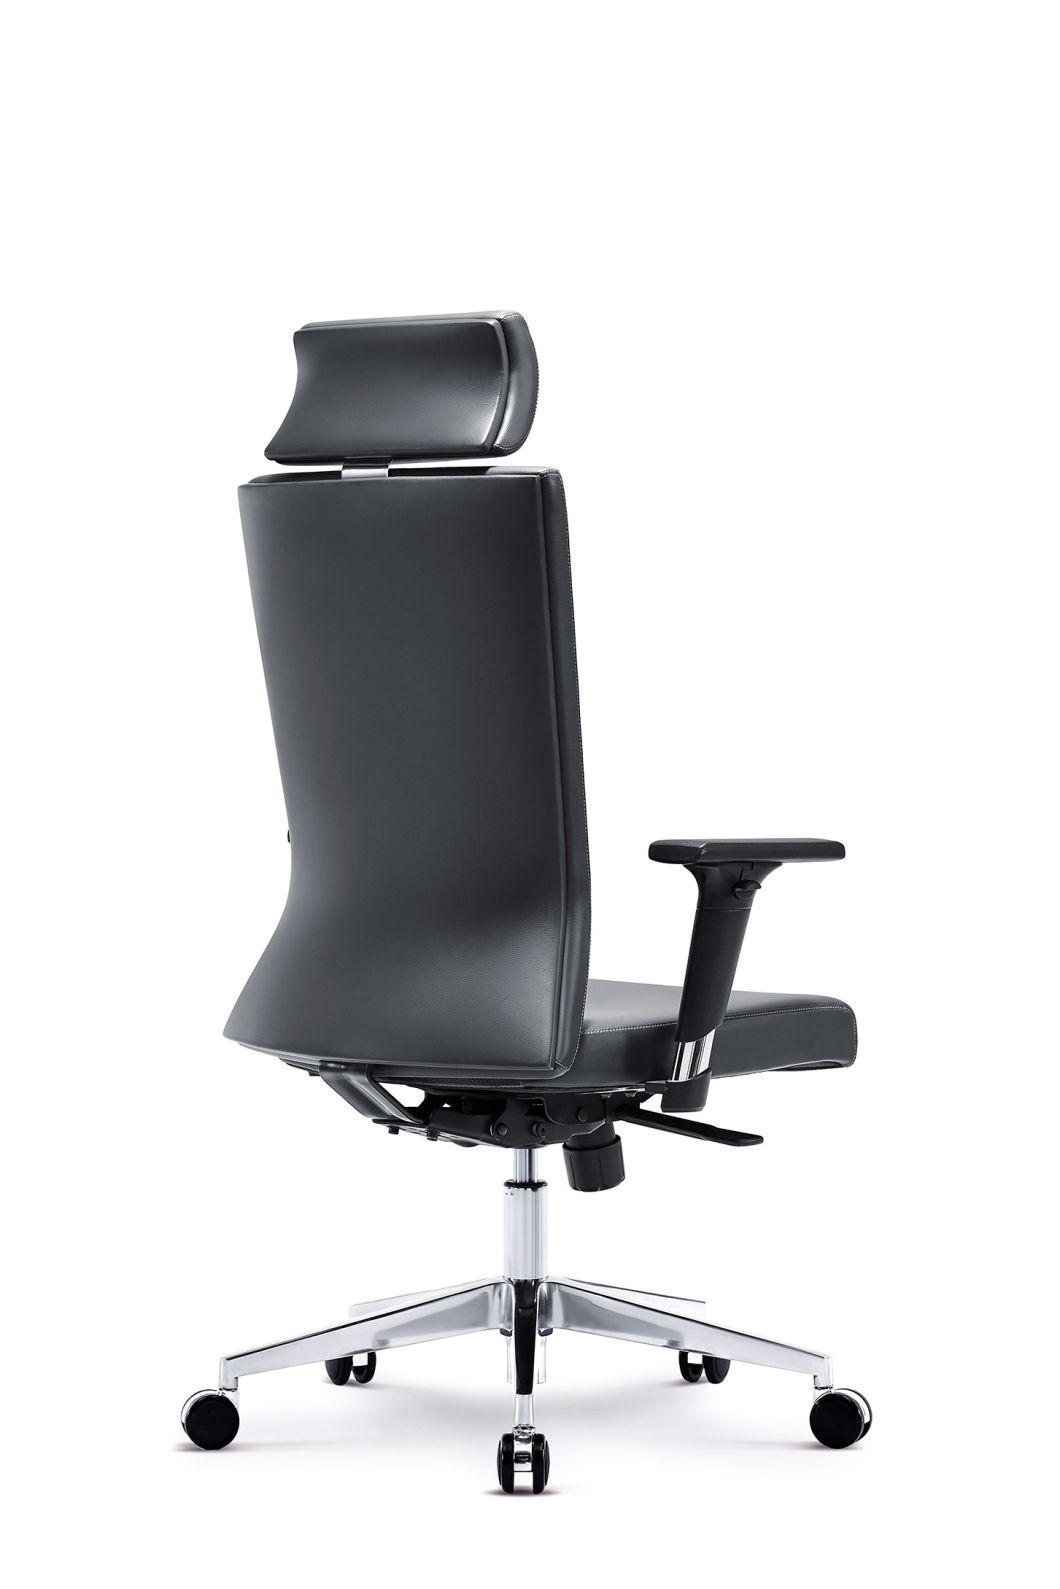 Luxury Dark Grey Leather Design Computer Games Swivel Chair Popular Design Office Chair